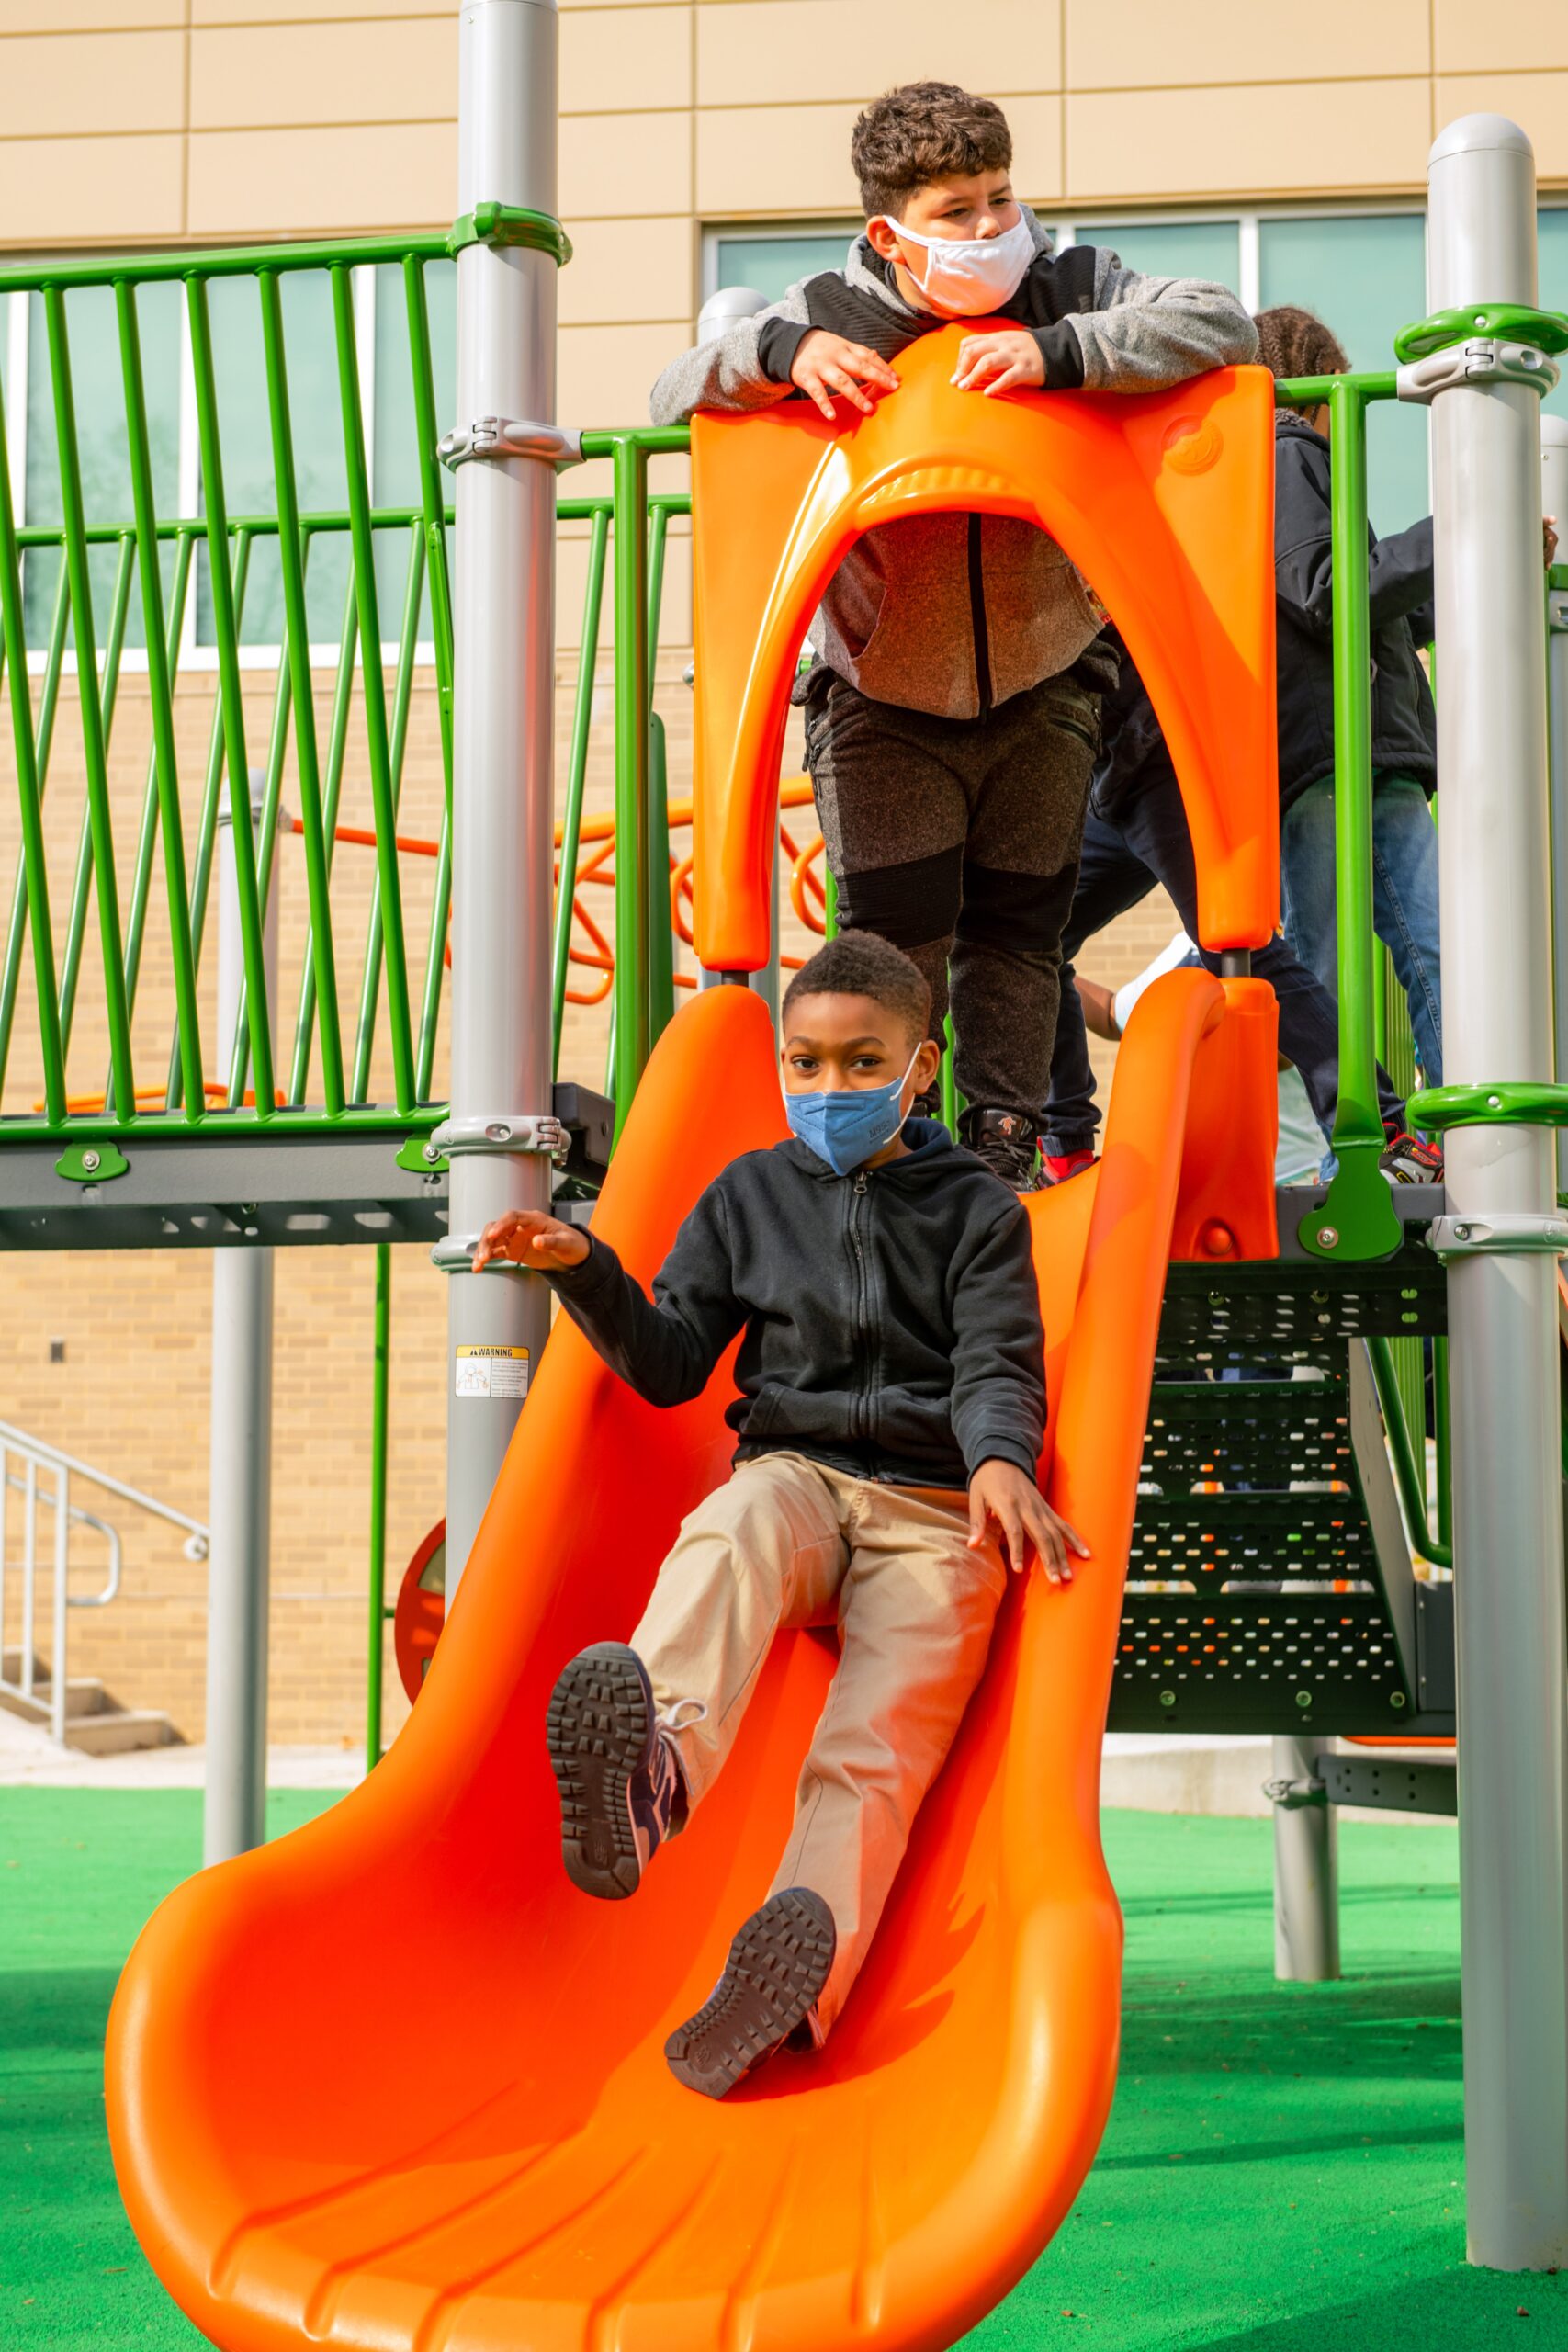 going down slide on playground